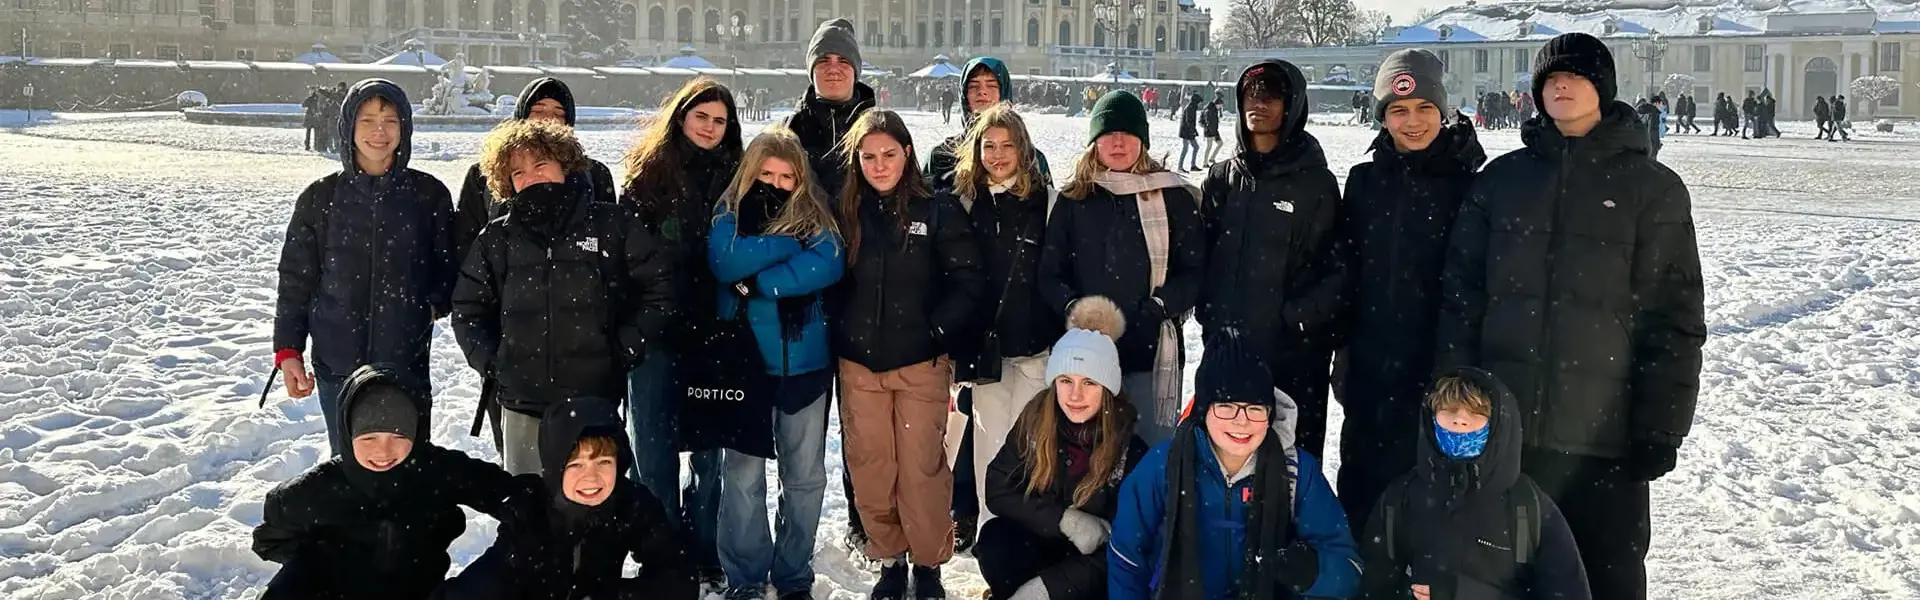 Senior 8 pupils studying German enjoyed a wonderfully festive trip to snowy Vienna.